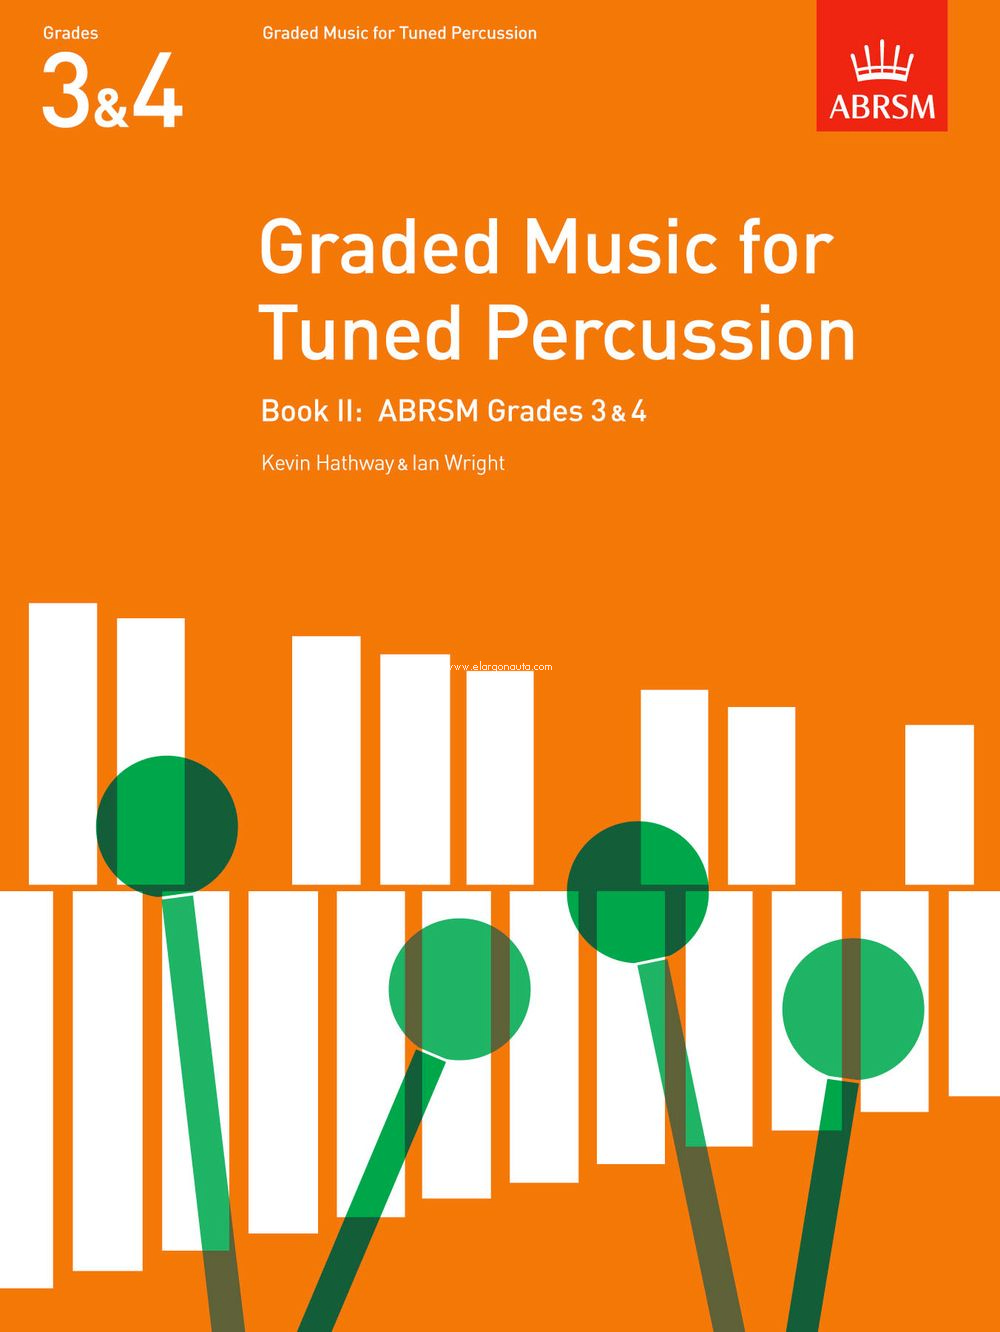 Graded Music for Tuned Percussion, Book II. 9781854724656